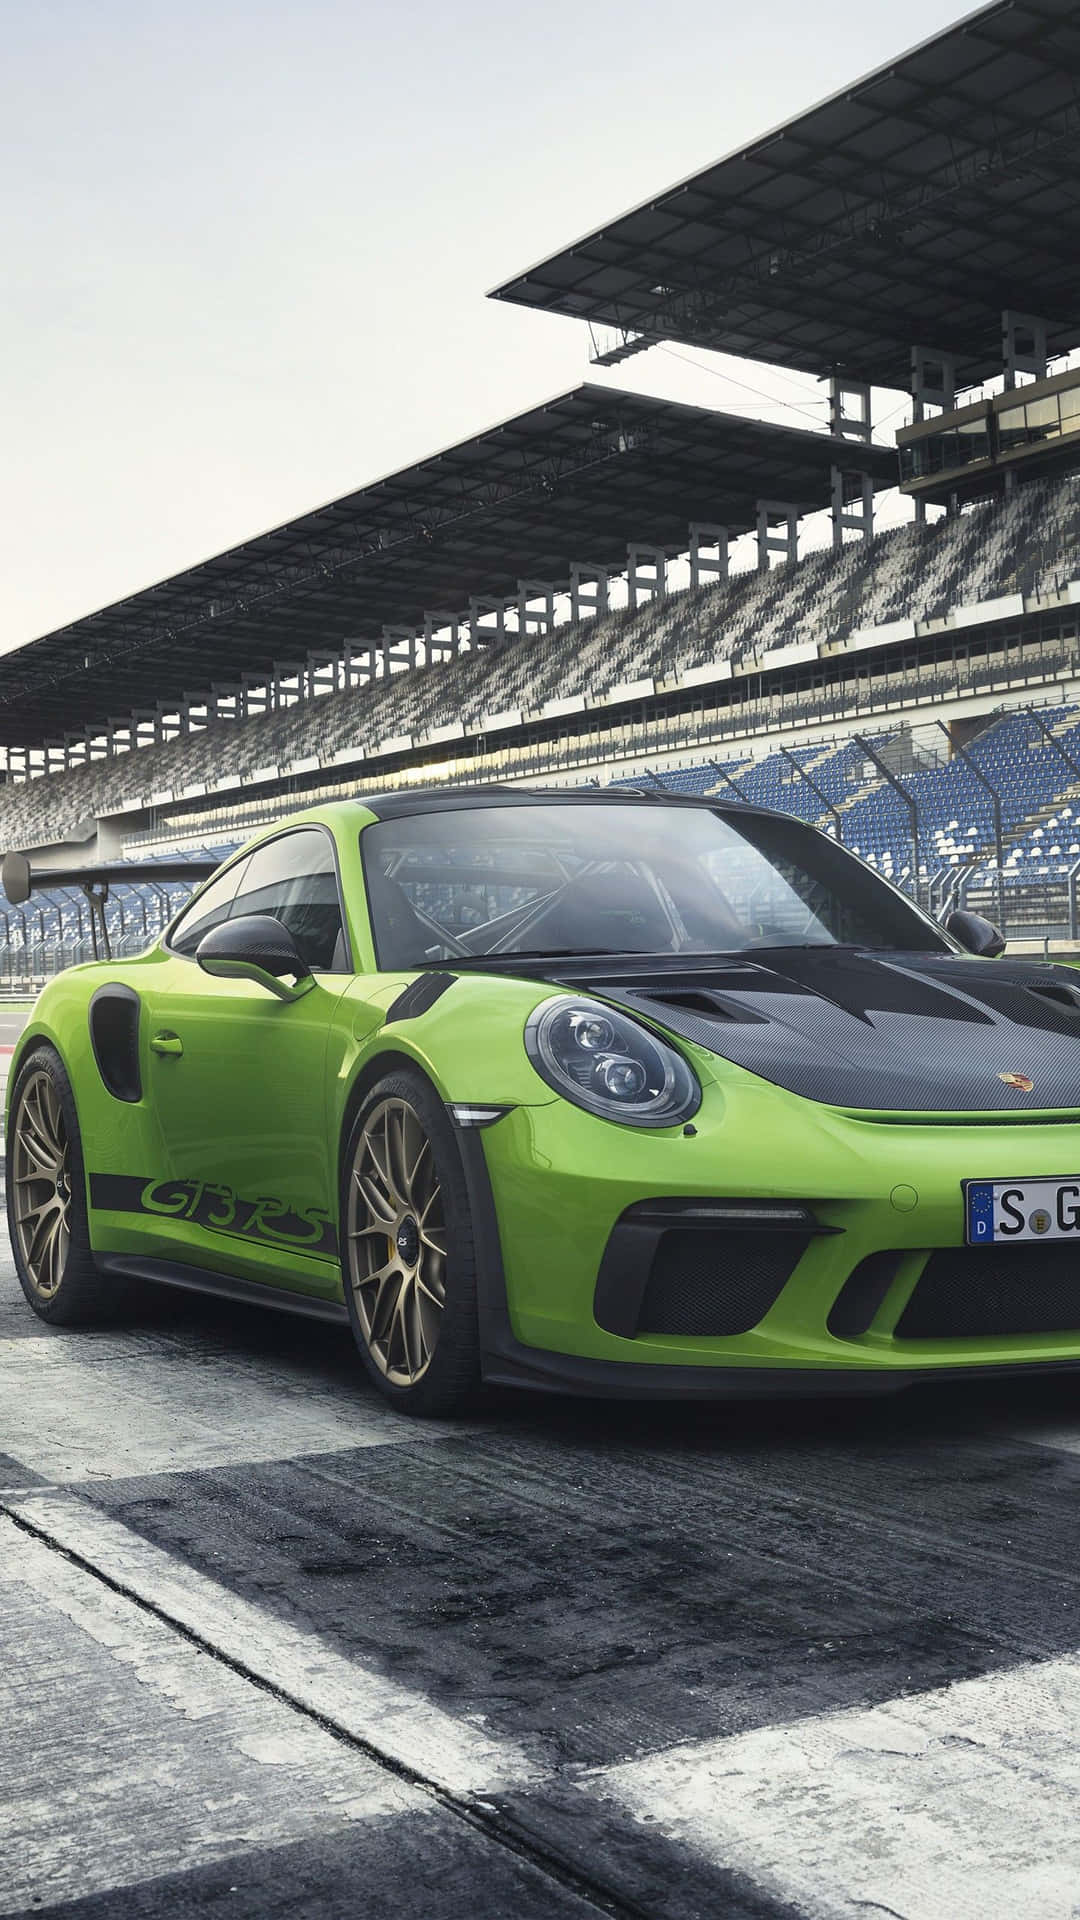 Porsche iPhone Wallpaper: Sleek, Sporty, and Sophisticated Wallpaper